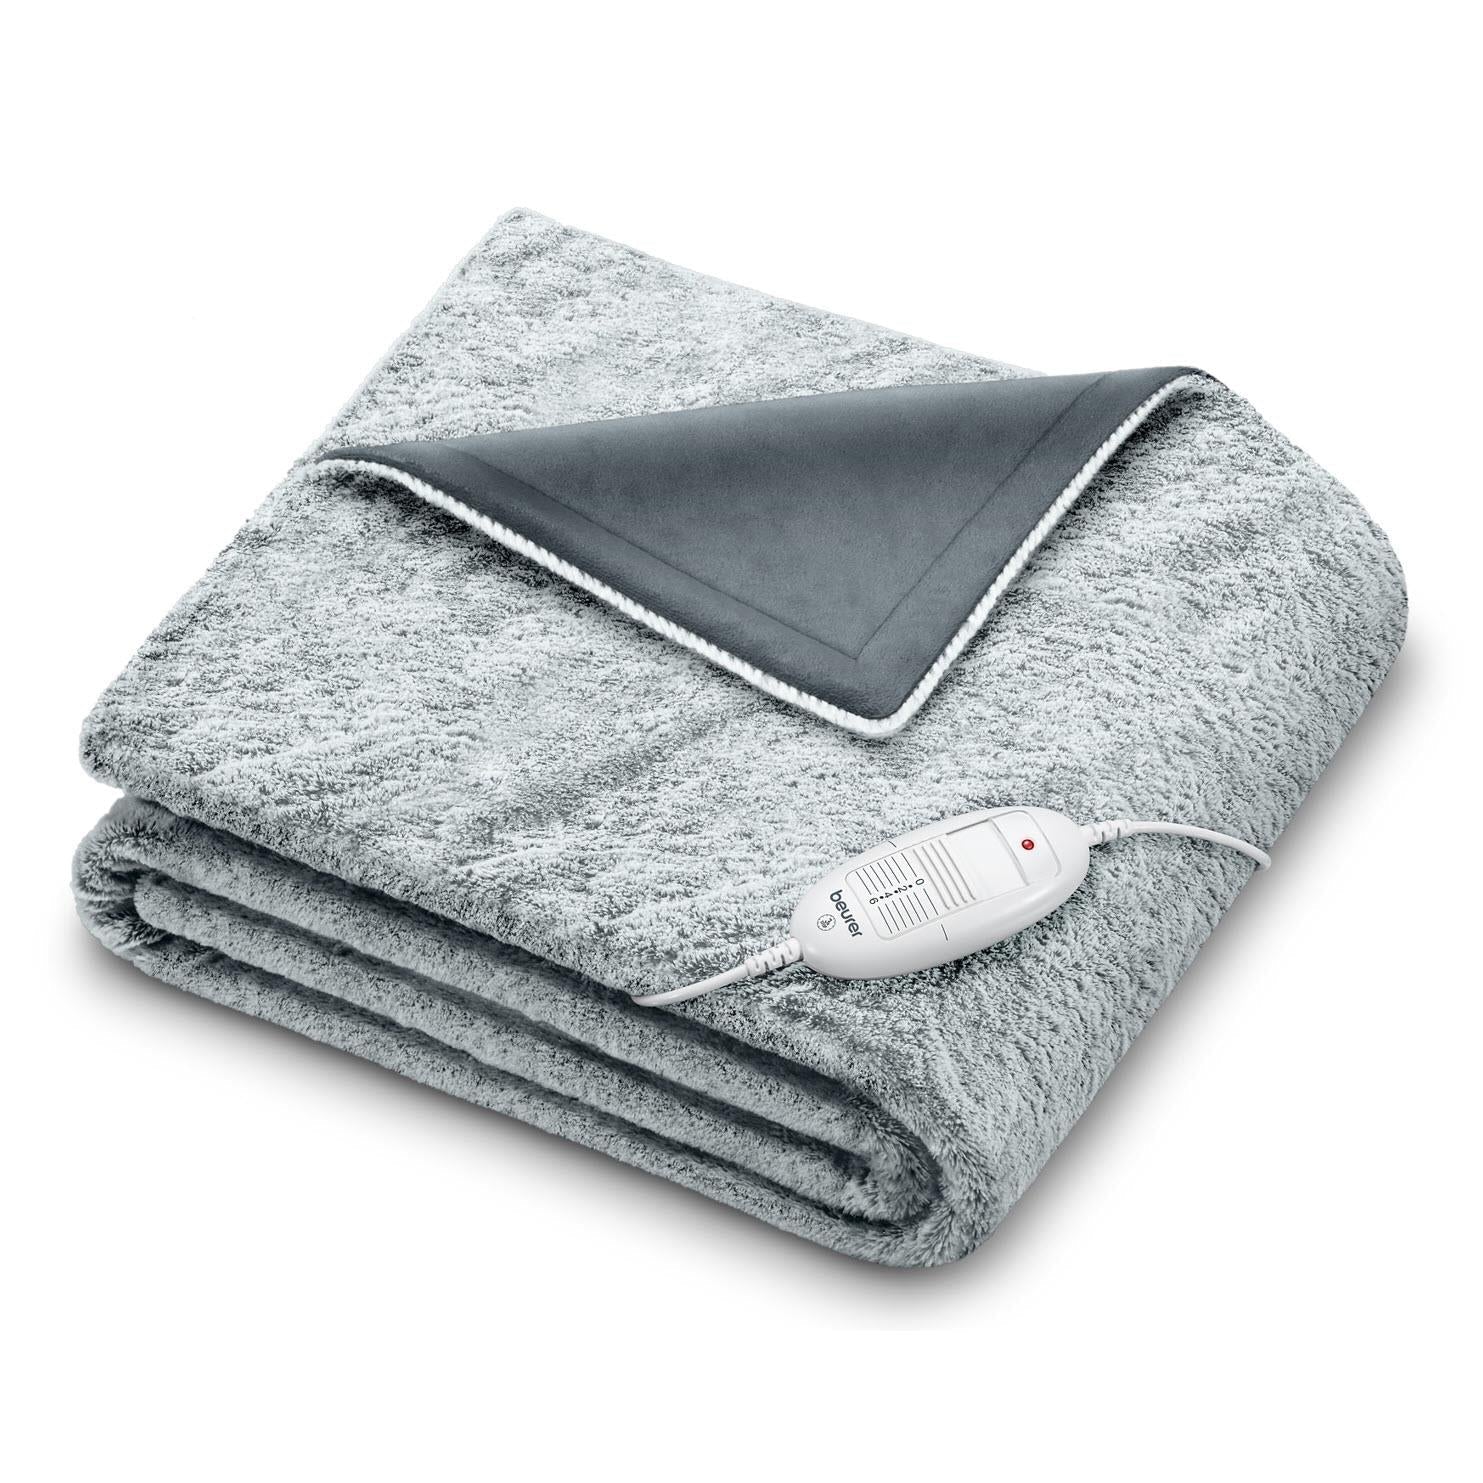 Buerer Heated Over blanket Throw (Cosy Nordic Grey)